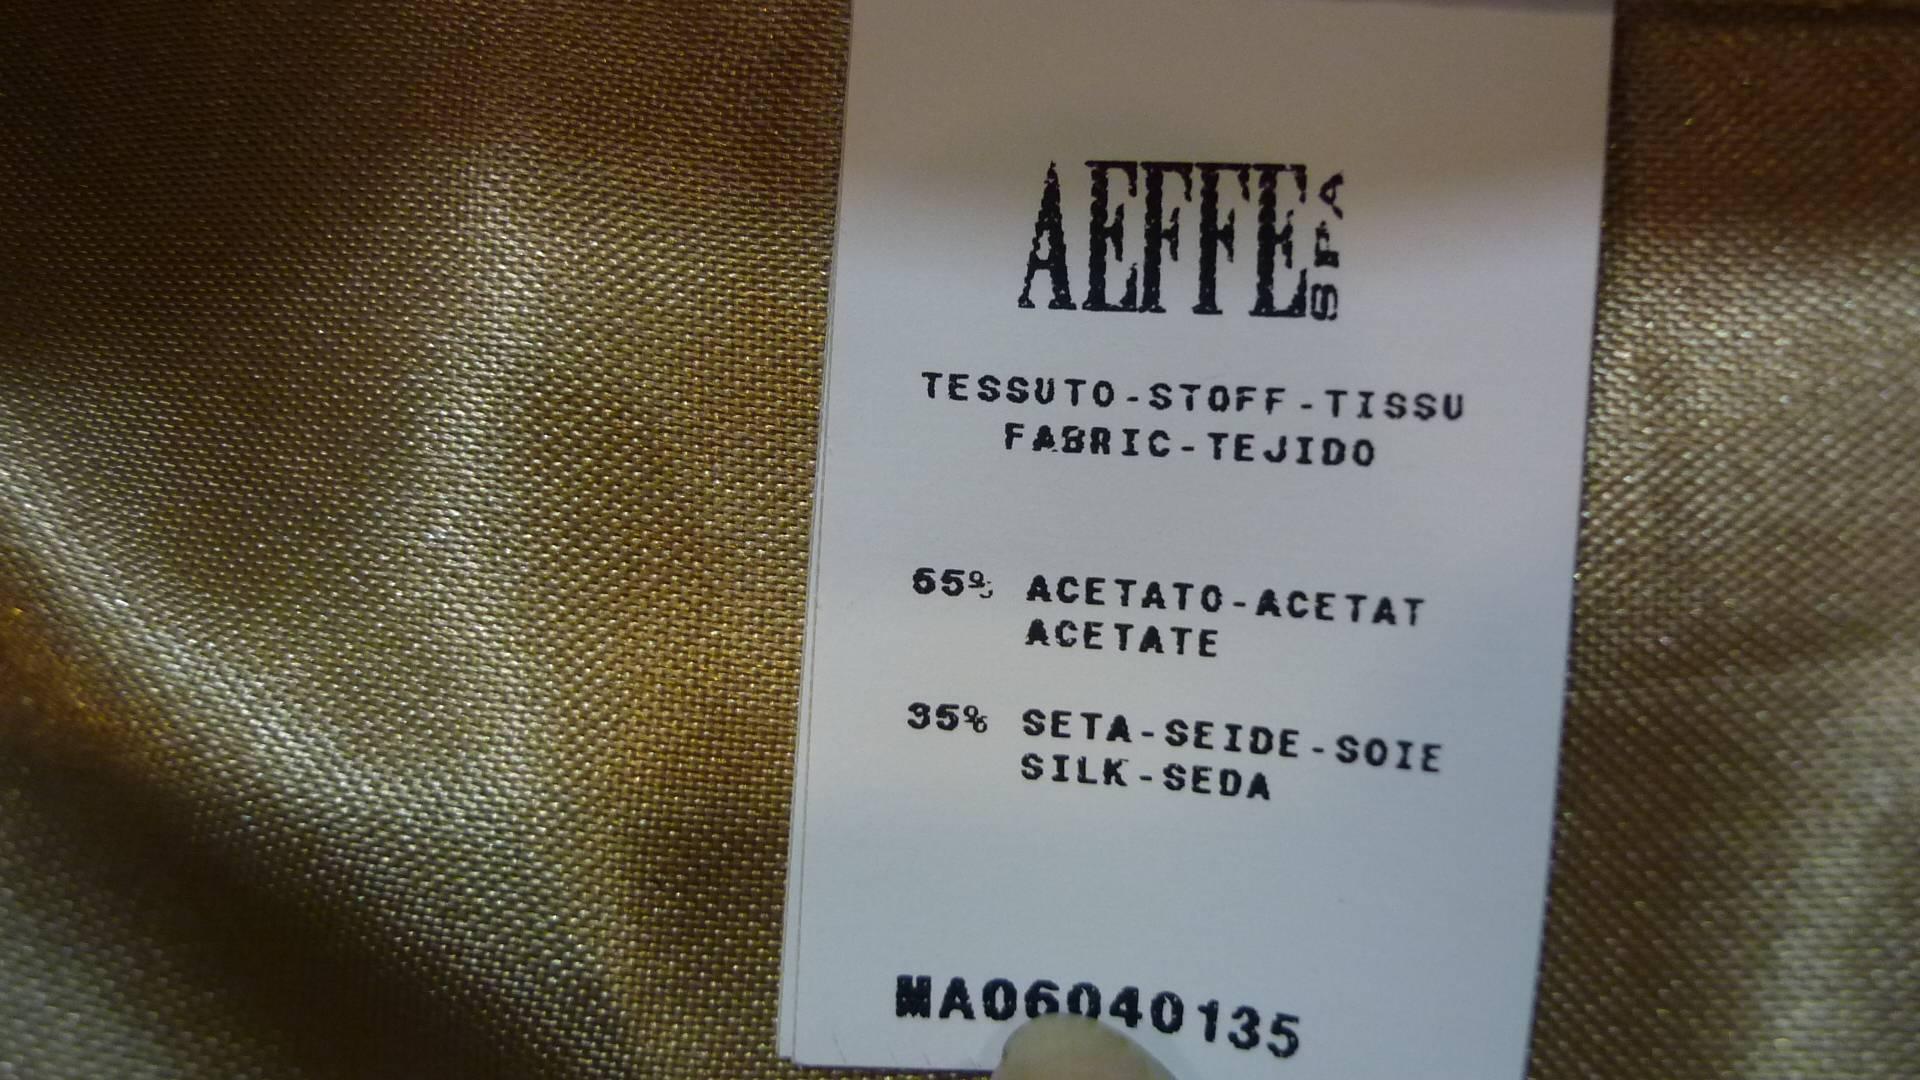 2008 S/S Alberta Ferretti Metallic Gold Patterned Dress (44 Itl) For Sale 3